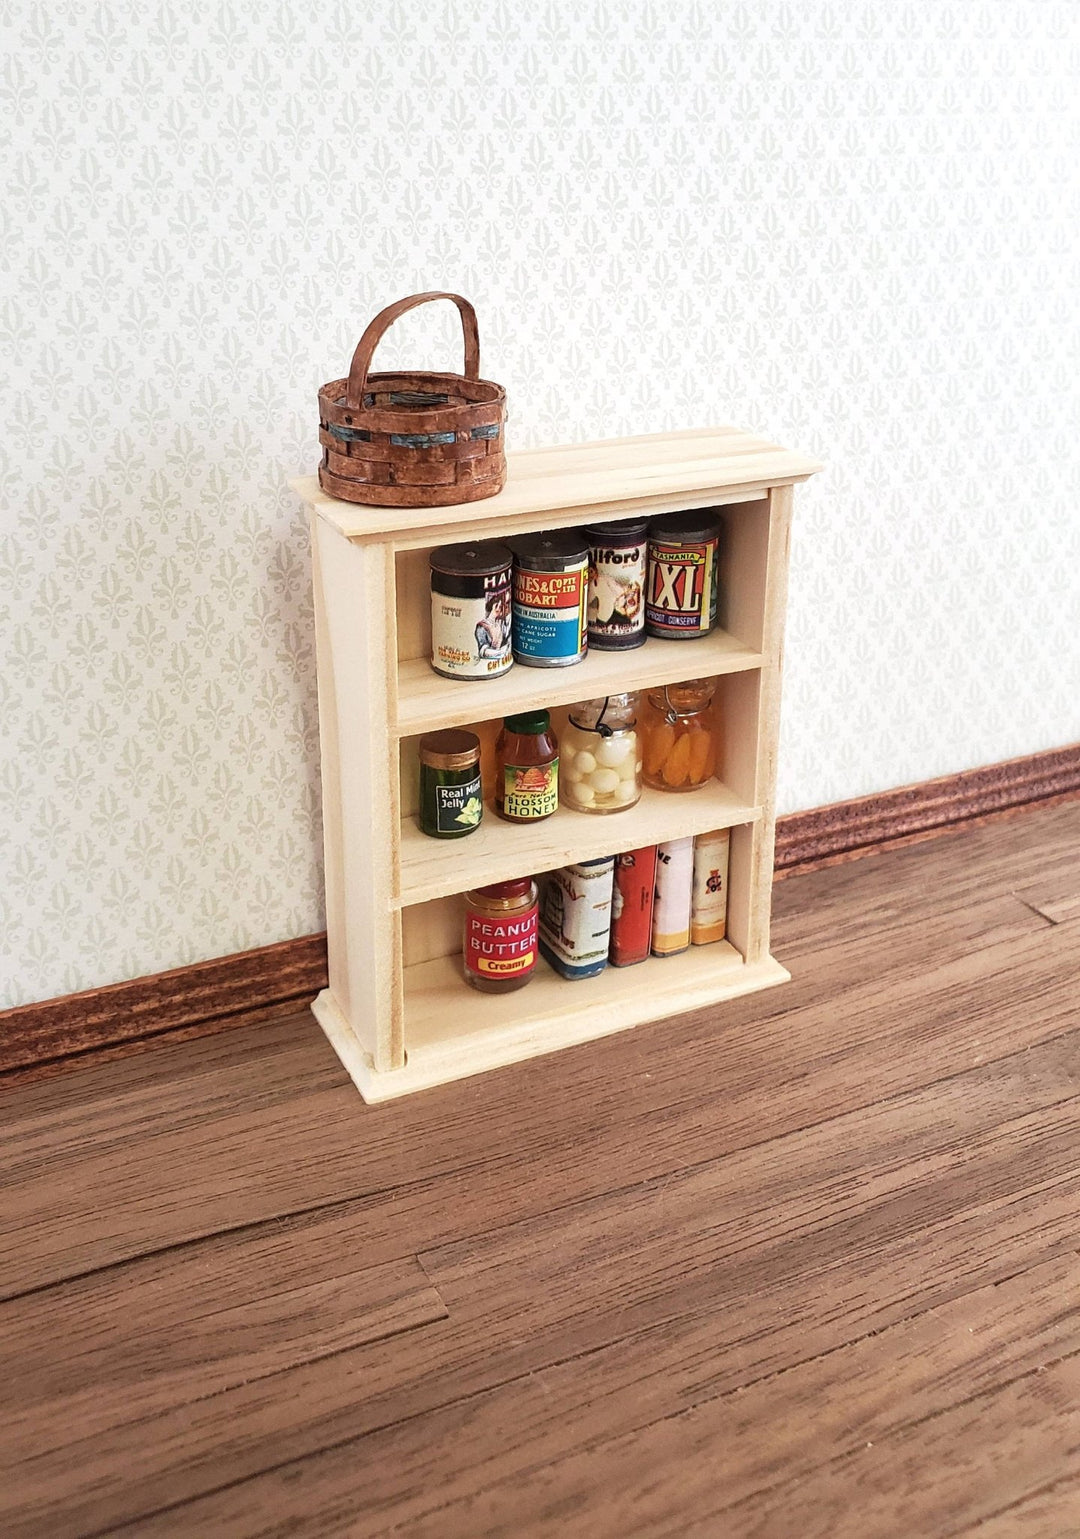 Dollhouse Miniature Hanging Shelf or Half Scale Bookcase 1:12 Scale Furniture Barewood - Miniature Crush